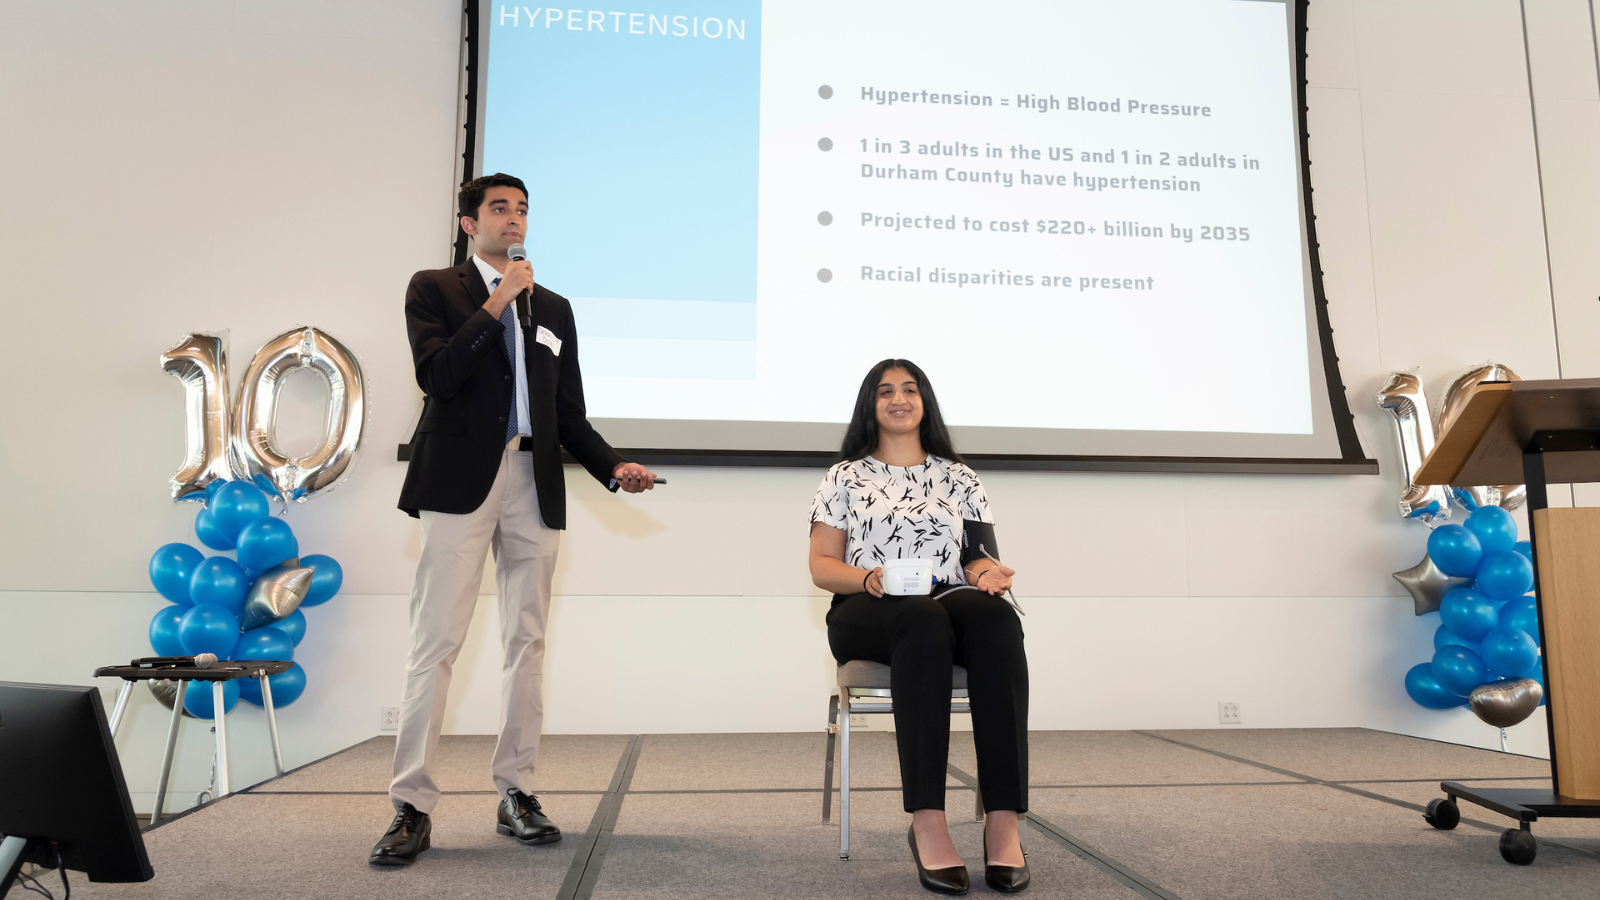 Devan Desai ’23, Anna Tharakan ’25 presented for the Closing the Gap on Health Disparity and Outcomes in Hypertension team.